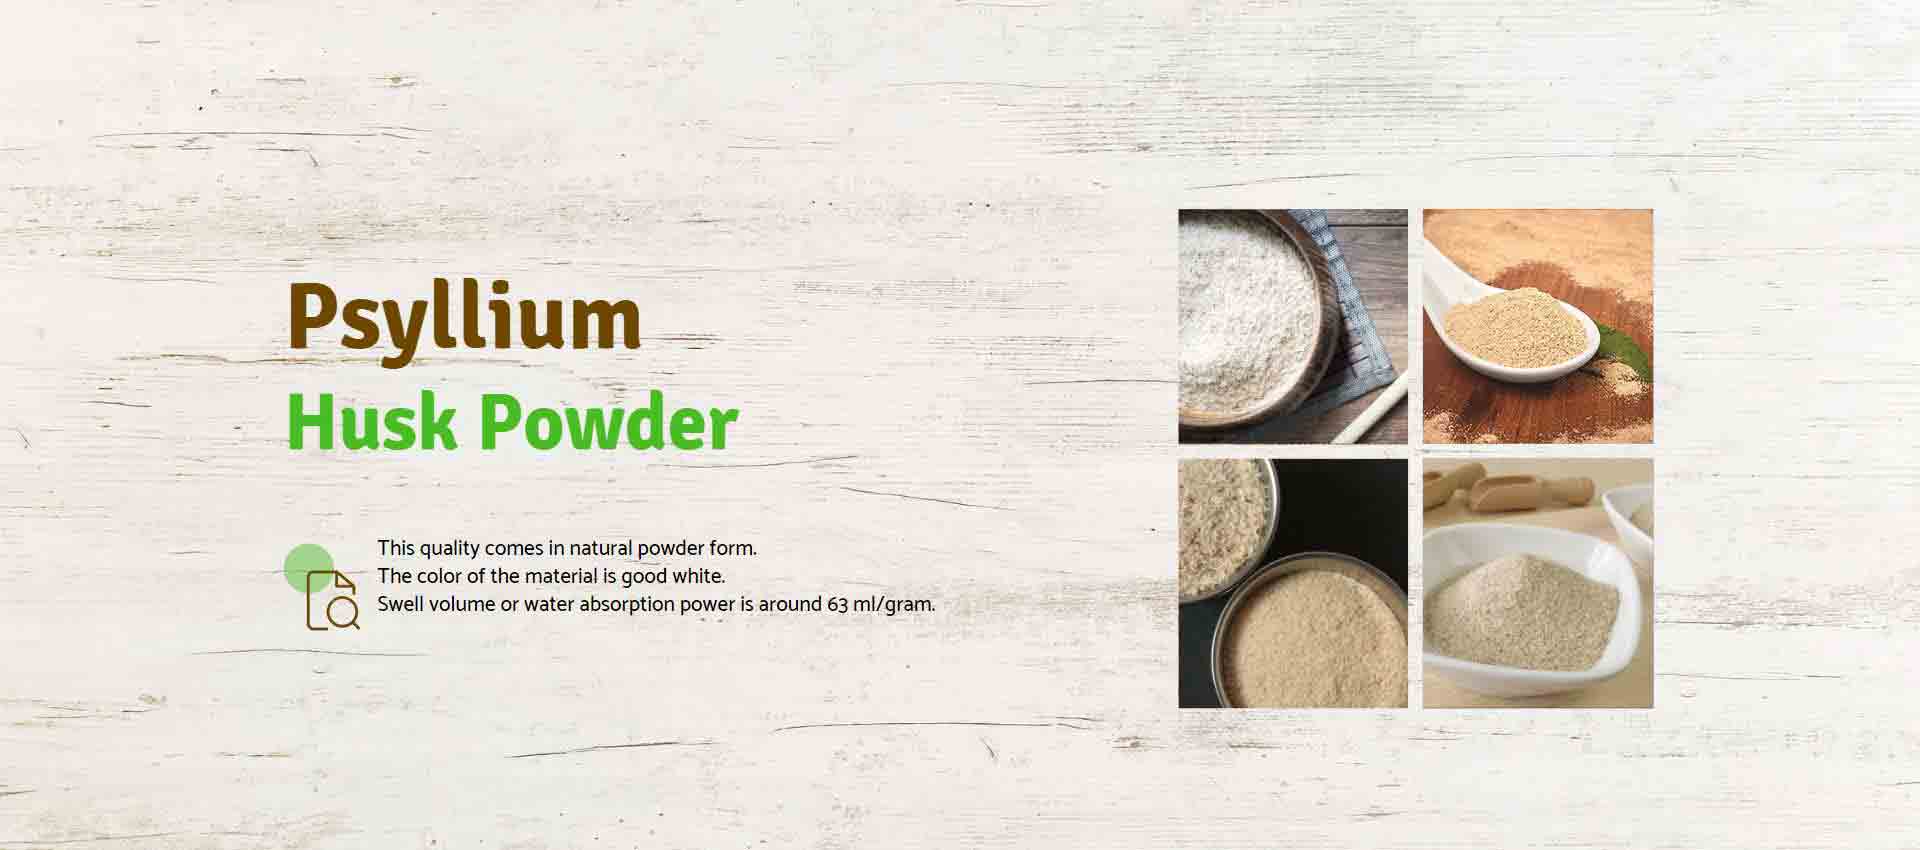 Psyllium Husk Powder Manufacturers in Colombia